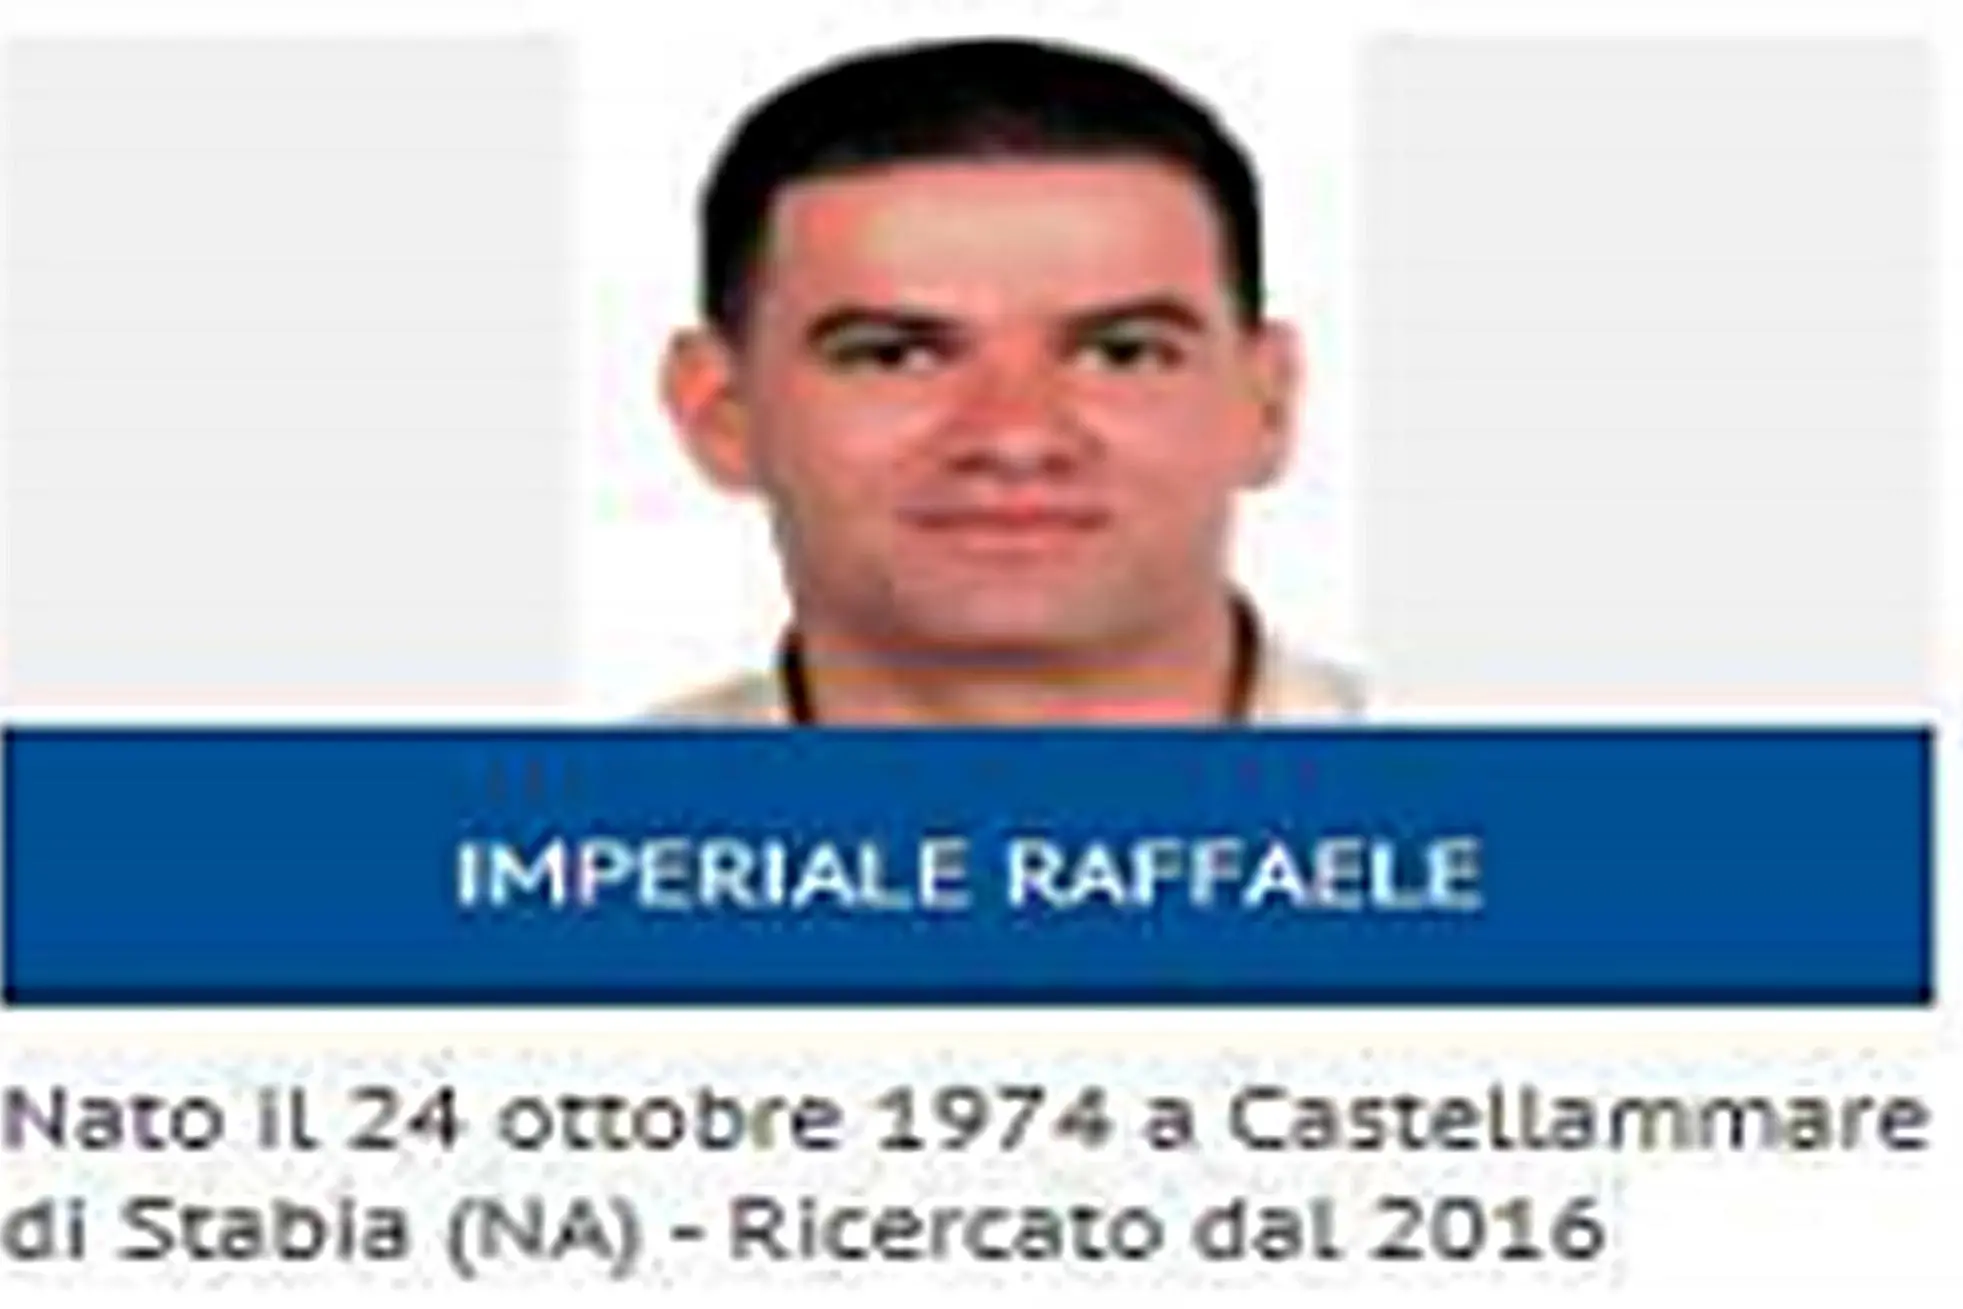 Raffaele Imperiale (Ansa)